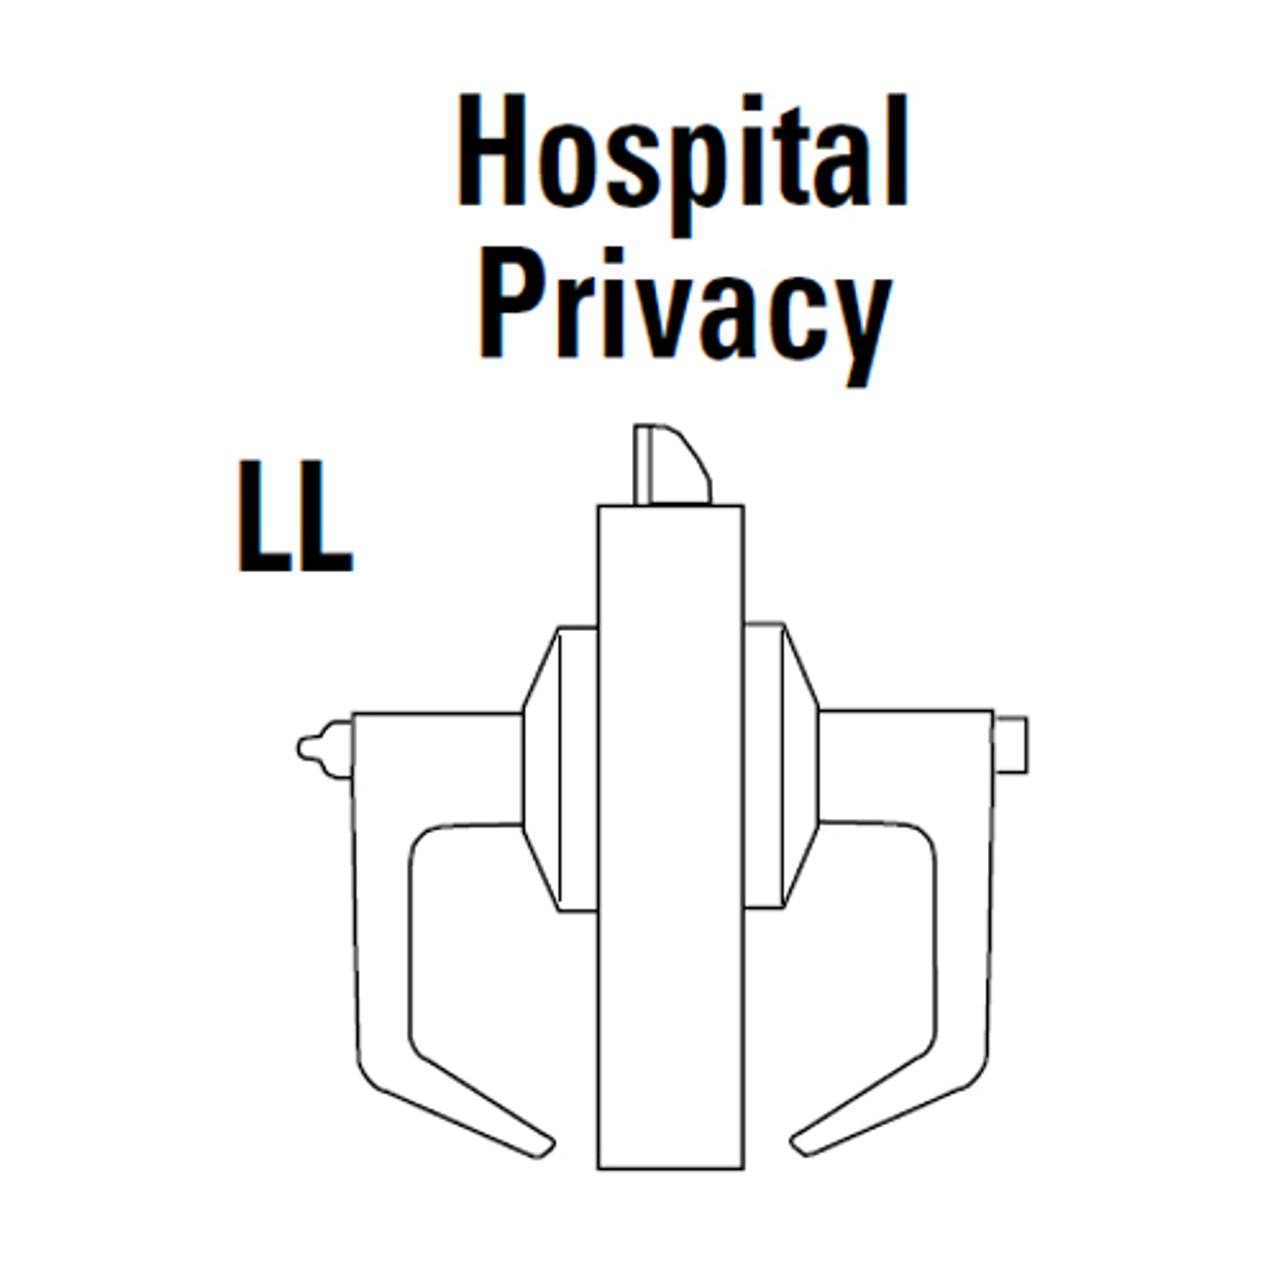 9K30LL14CSTK618LM Best 9K Series Hospital Privacy Heavy Duty Cylindrical Lever Locks in Bright Nickel